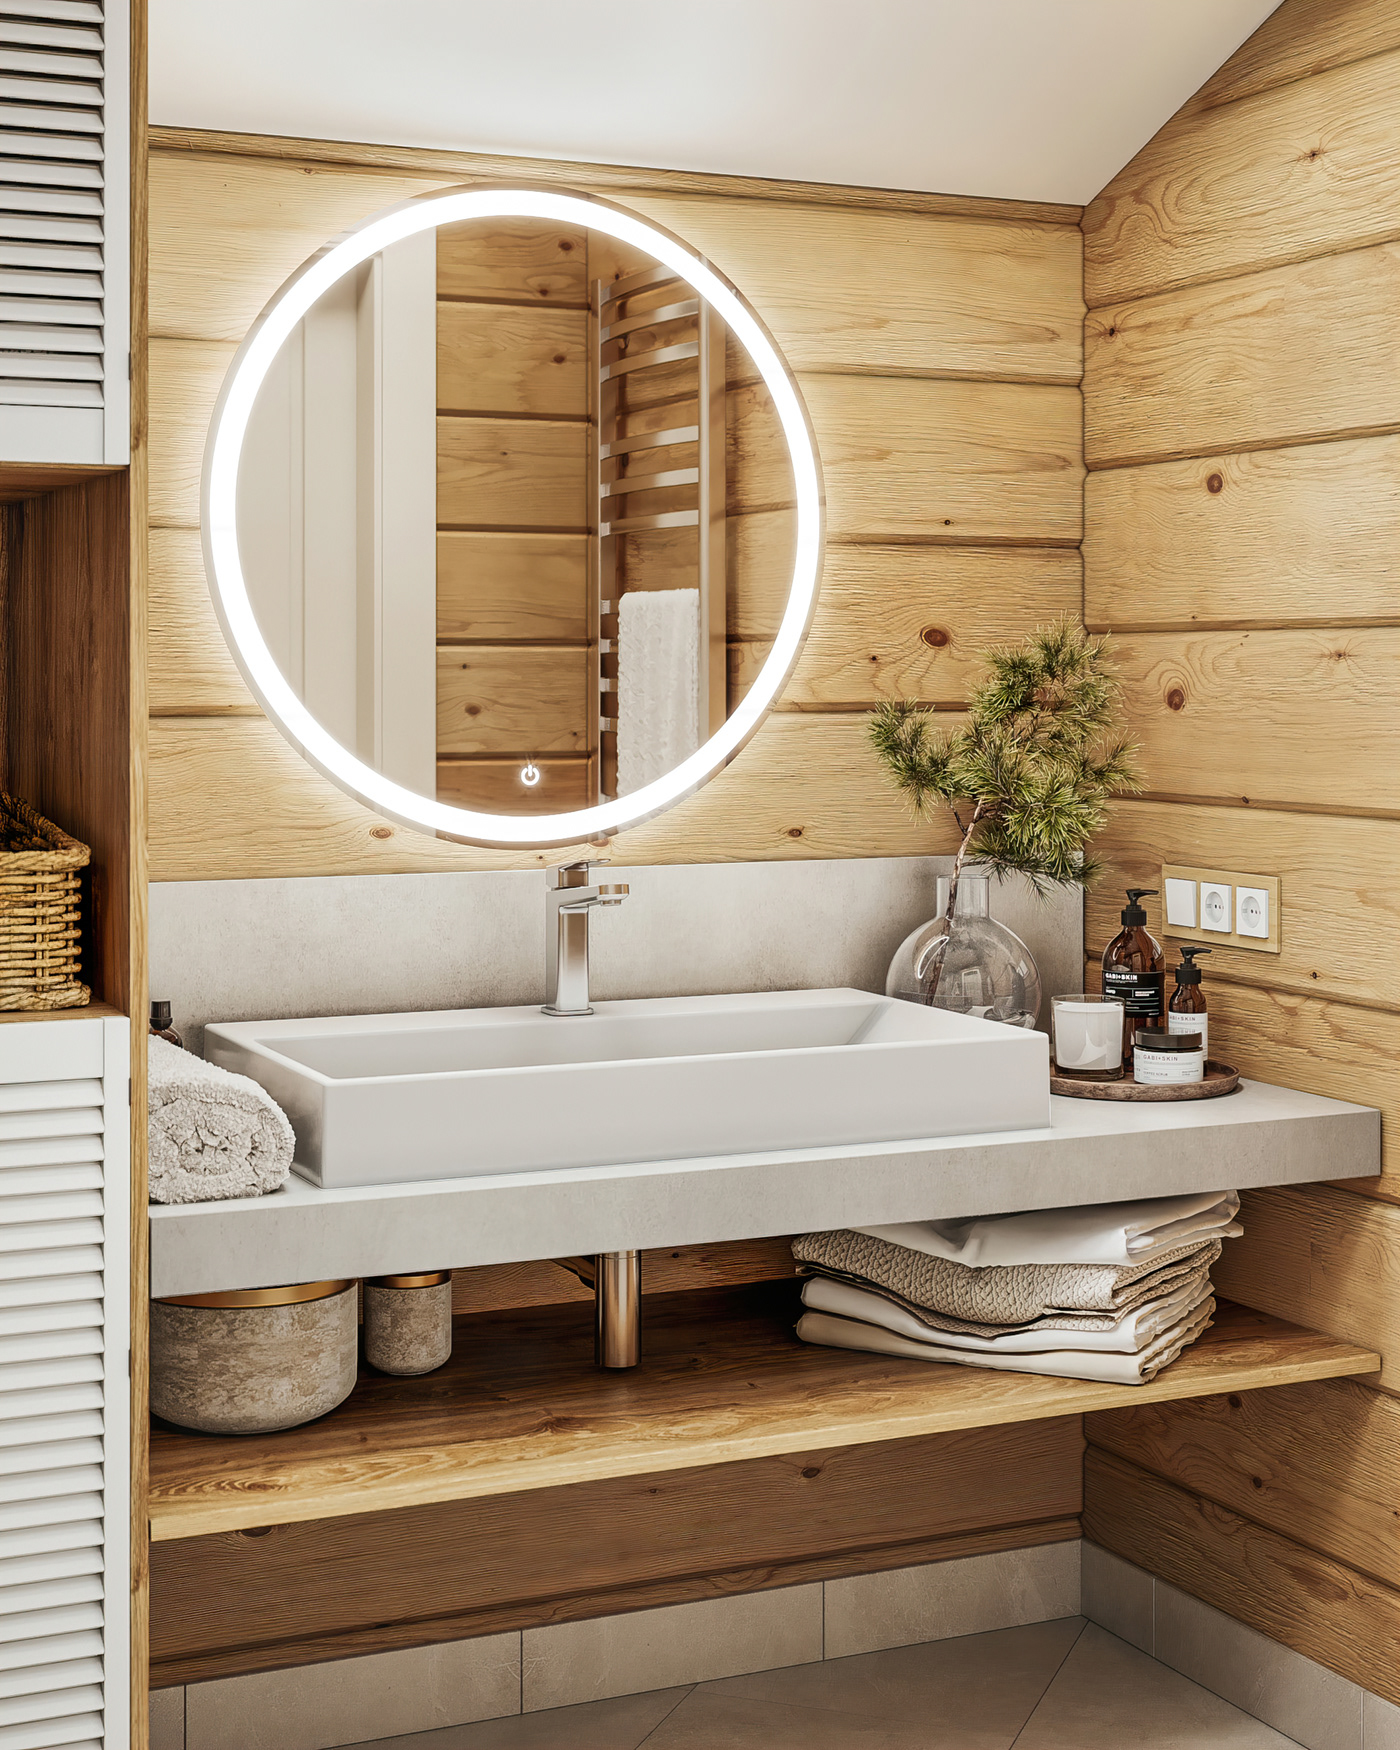 3dsmax bedroom CGI corona render  house Interior interior design  Render visualization wood